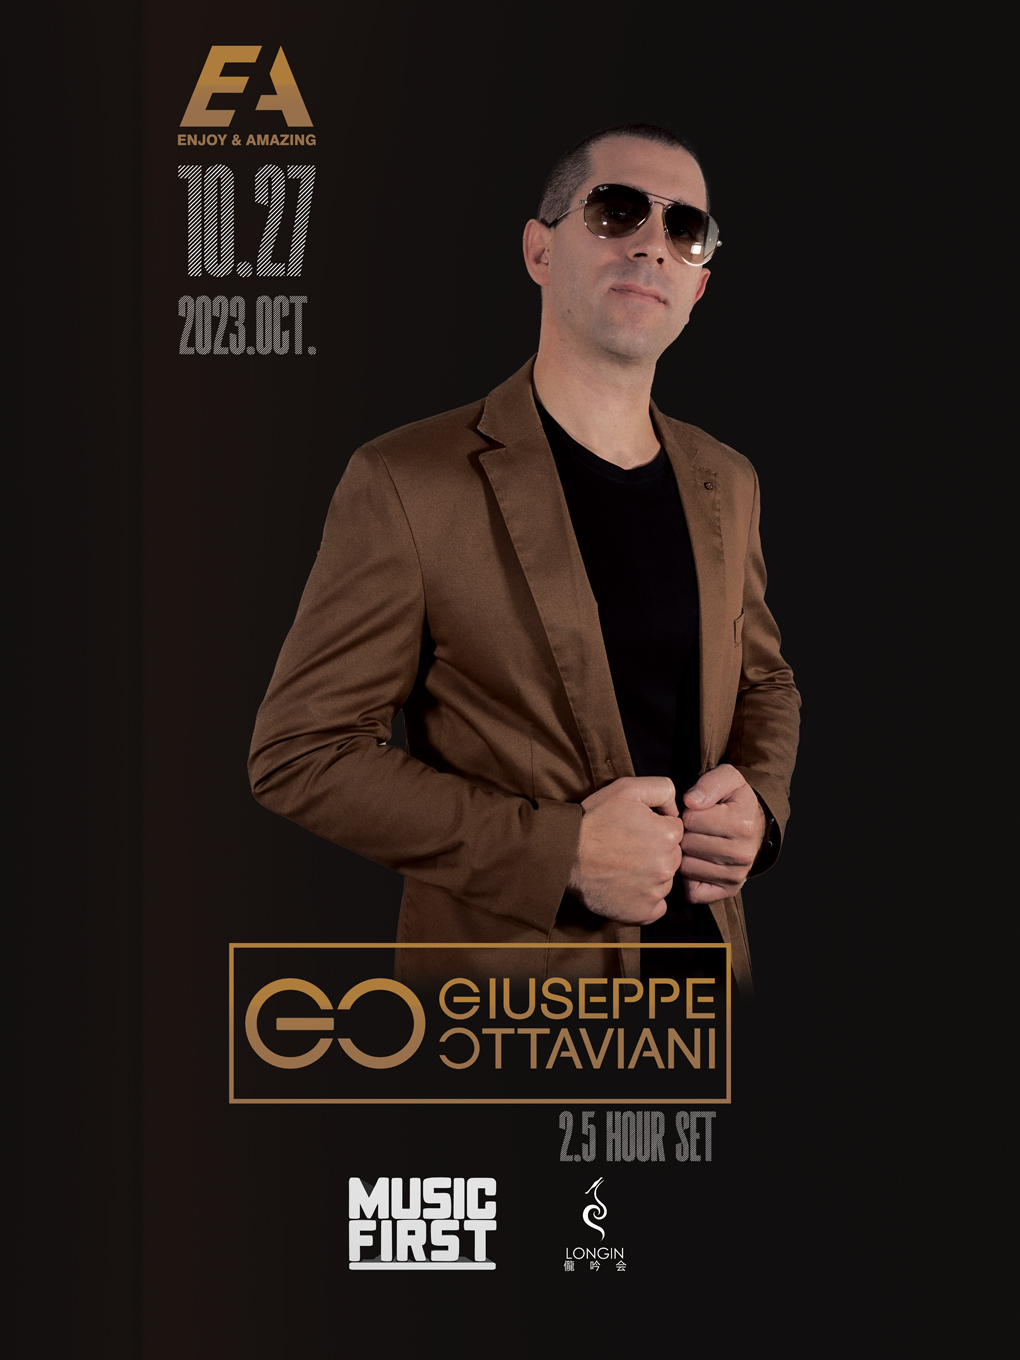 Giuseppexa0 Ottaviani 【珠海】EA CLUB